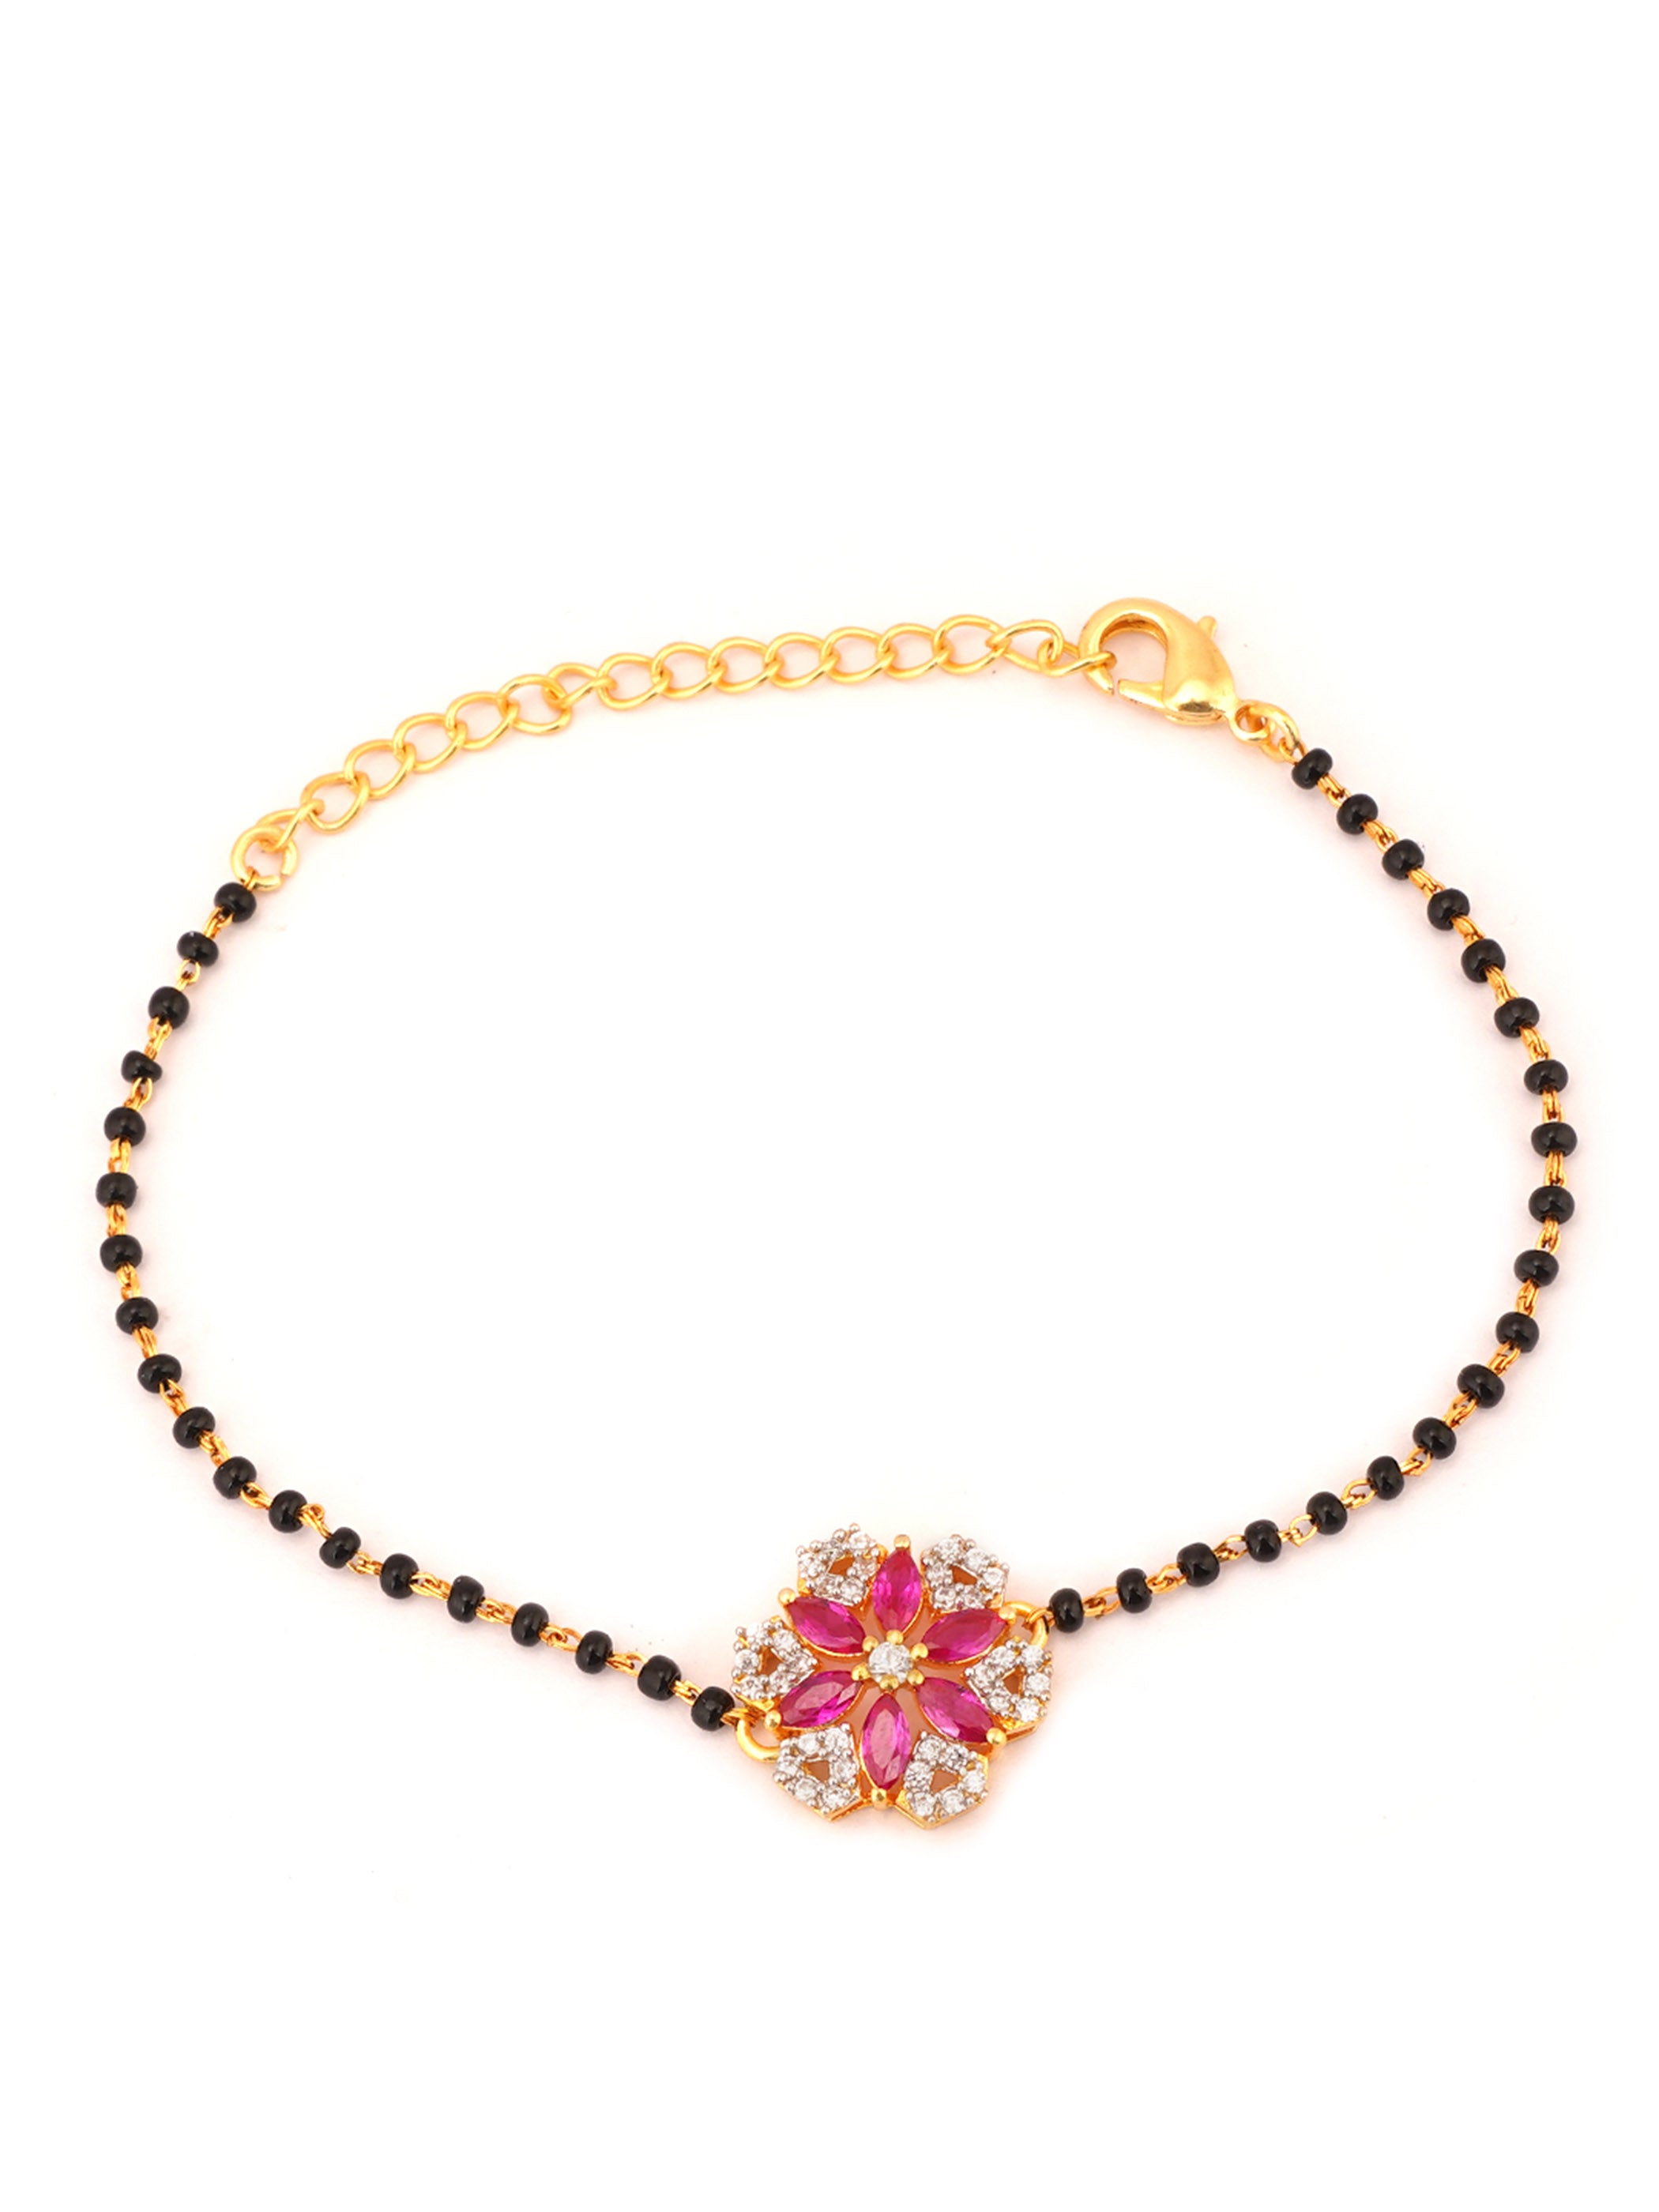 Shimmering Floret American Diamond CZ Black Beads and Flower Mangalsutra Bracelet